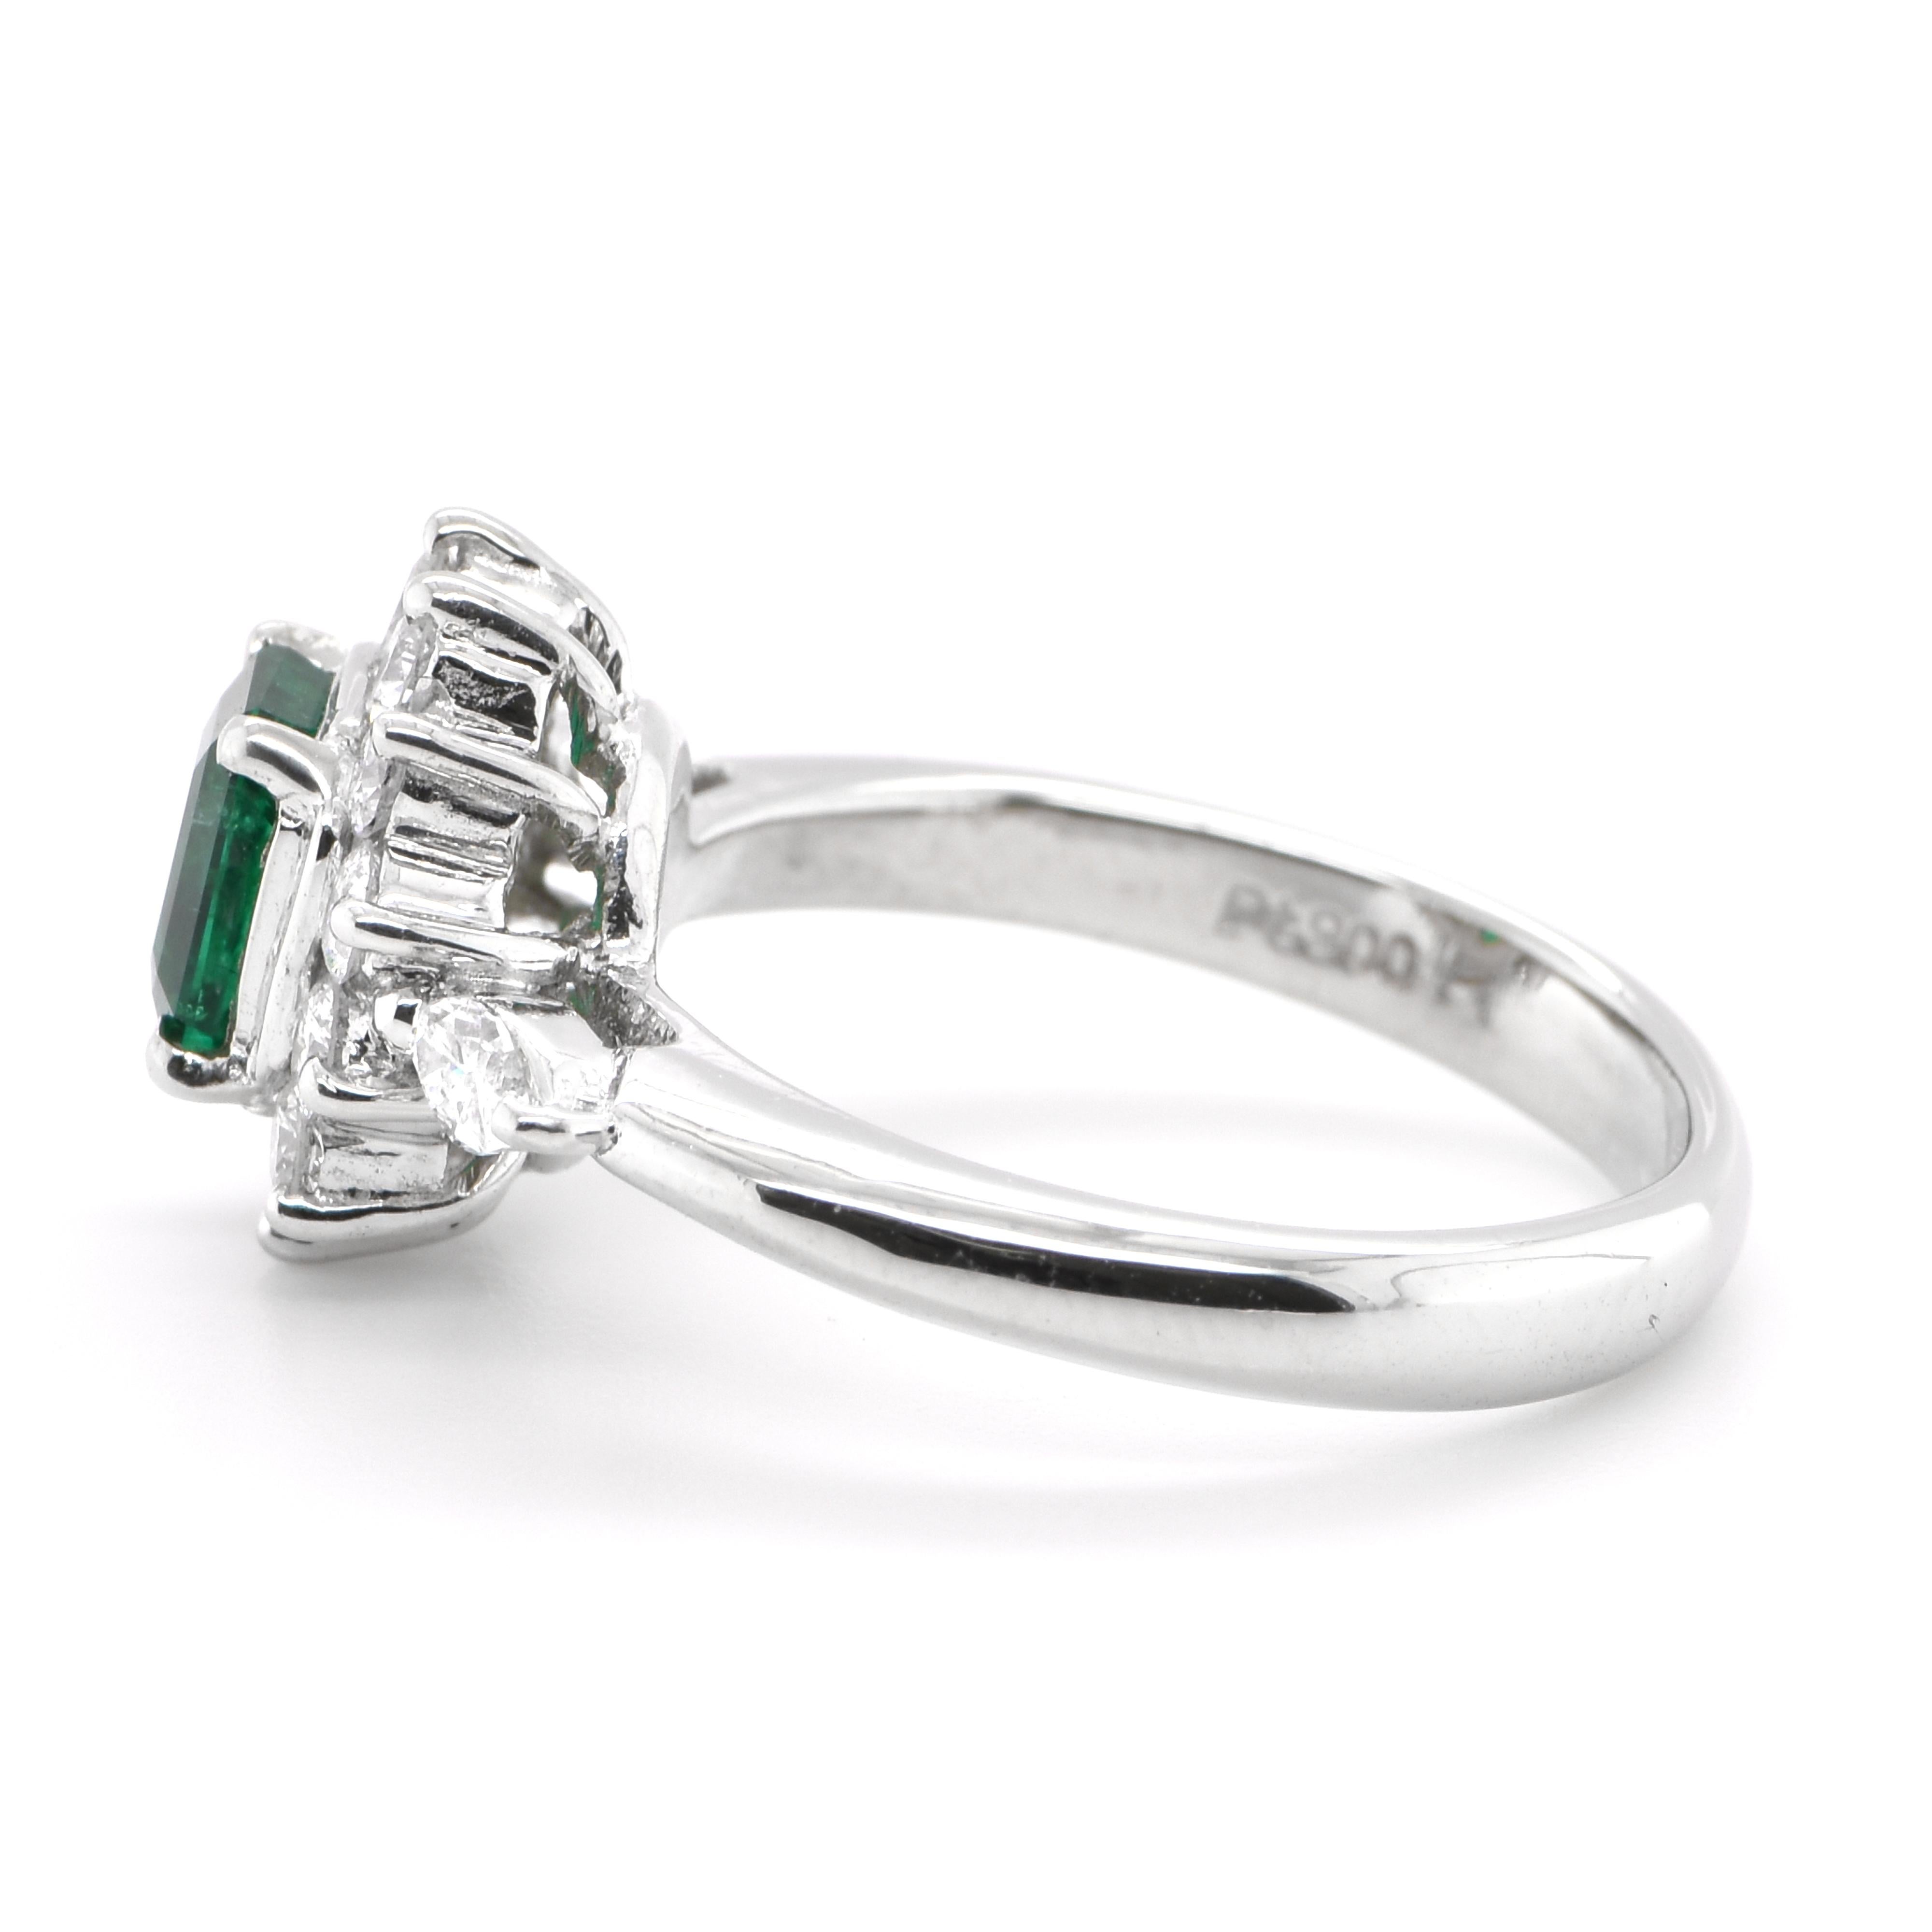 Emerald Cut 0.67 Carat Natural Emerald and Diamond Ring Set in Platinum